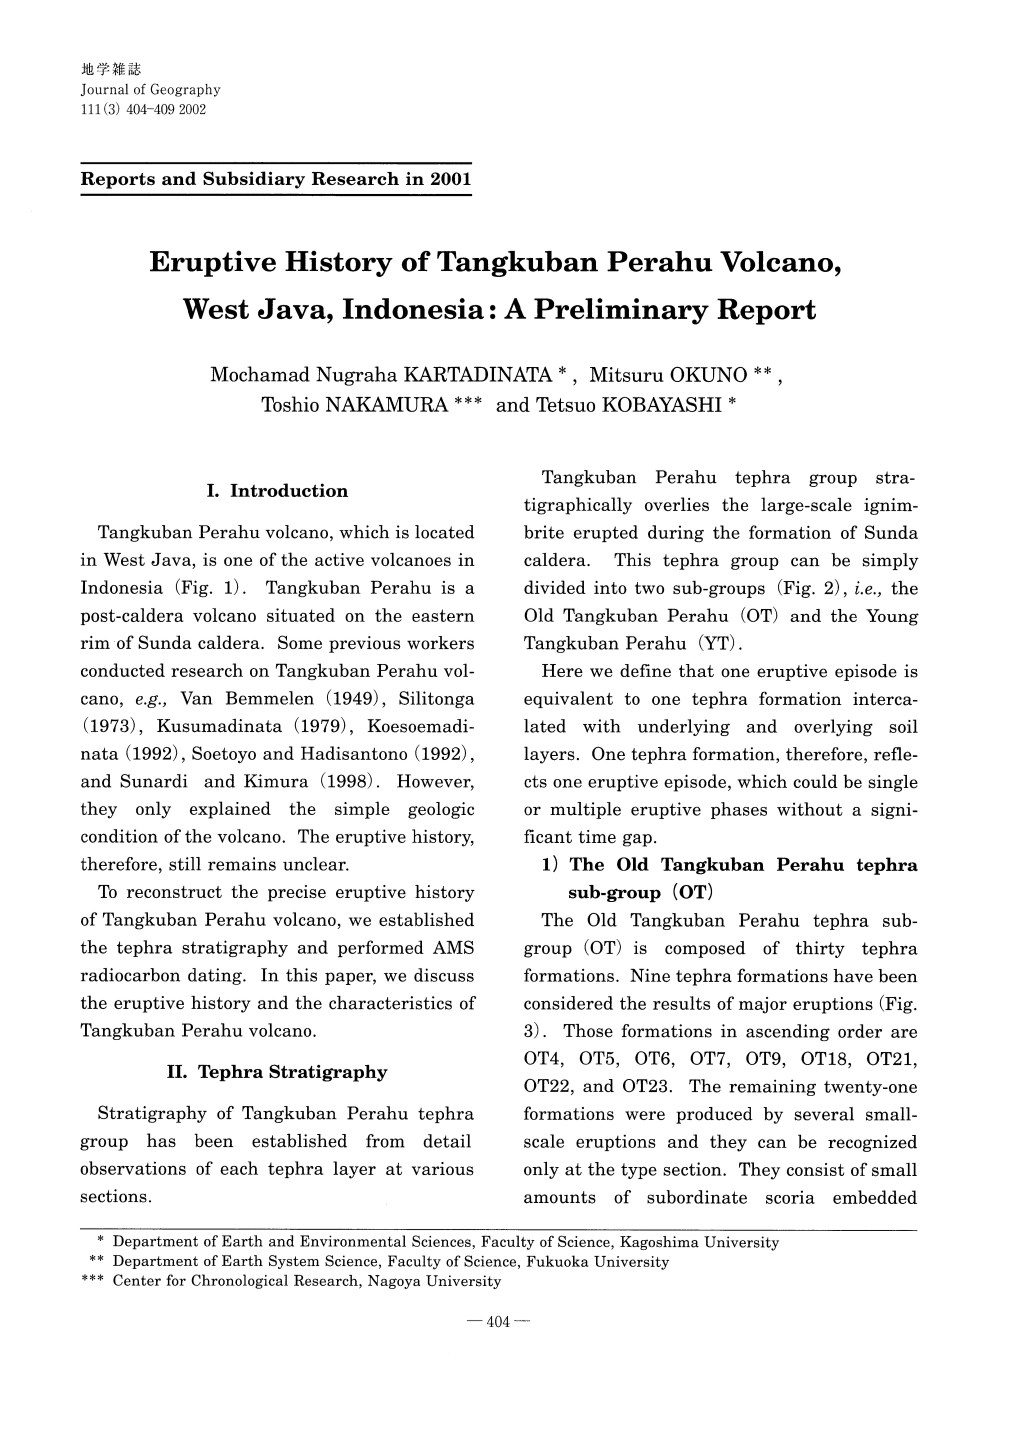 Eruptive History of Tangkuban Perahu Volcano, West Java, Indonesia